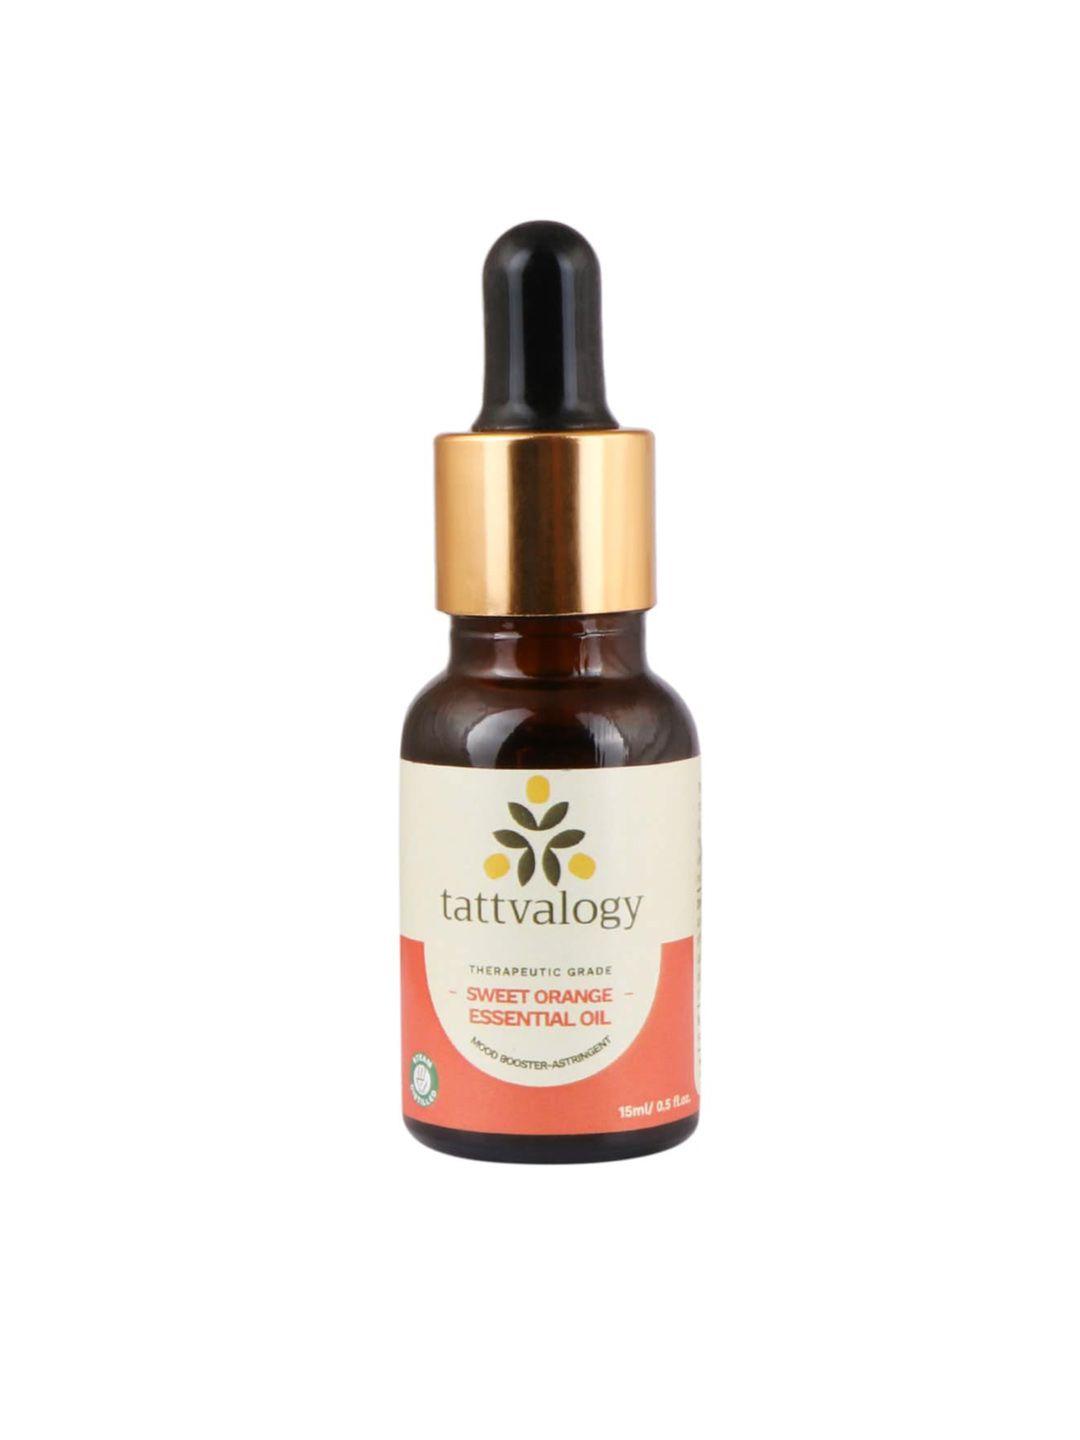 tattvalogy therapeutic grade sweet orange essential oil - 15 ml